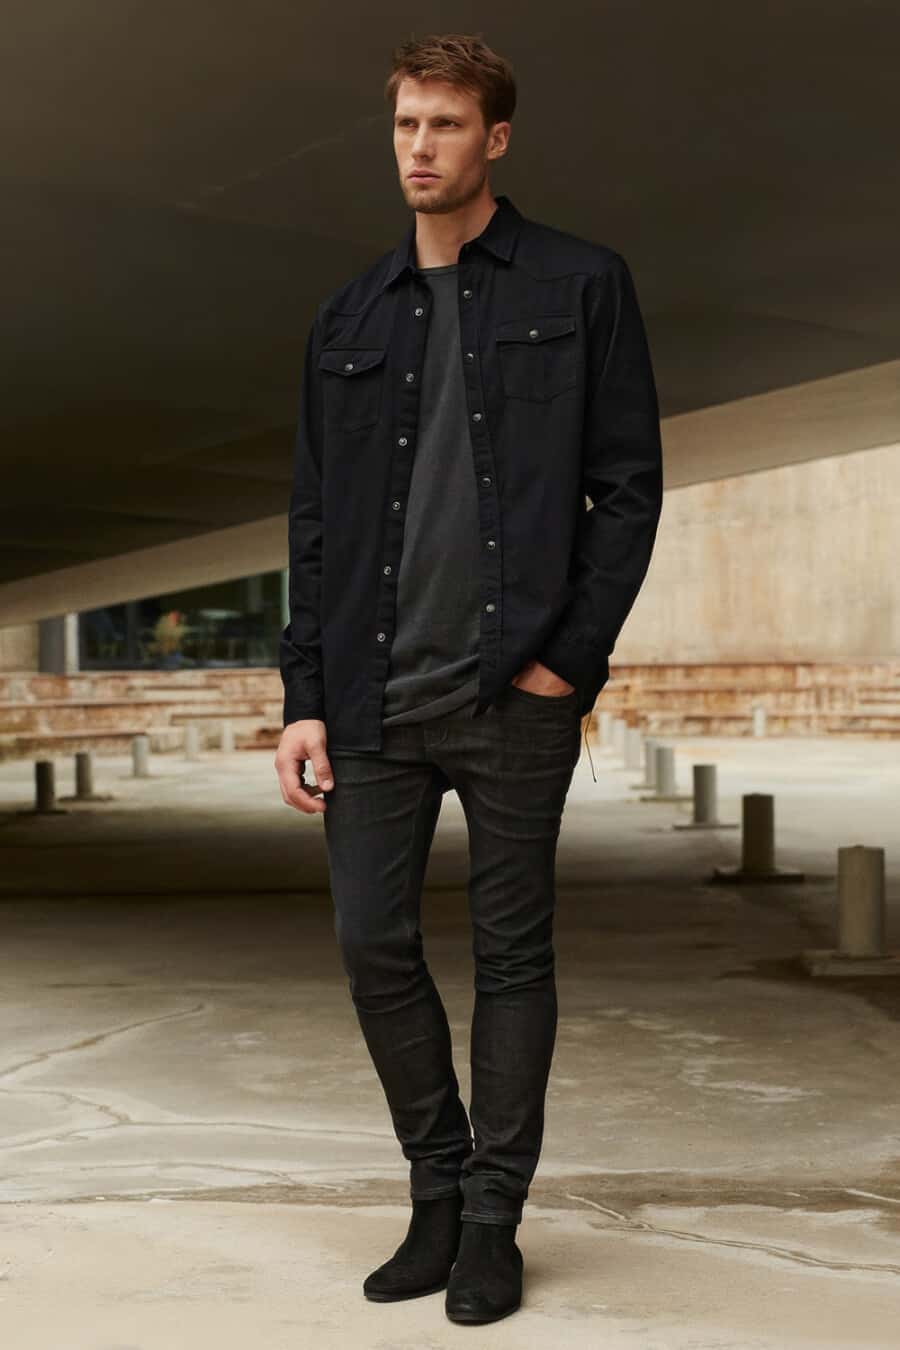 Men's black jeans, black T-shirt, black denim overshirt and black suede Chelsea boots outfit